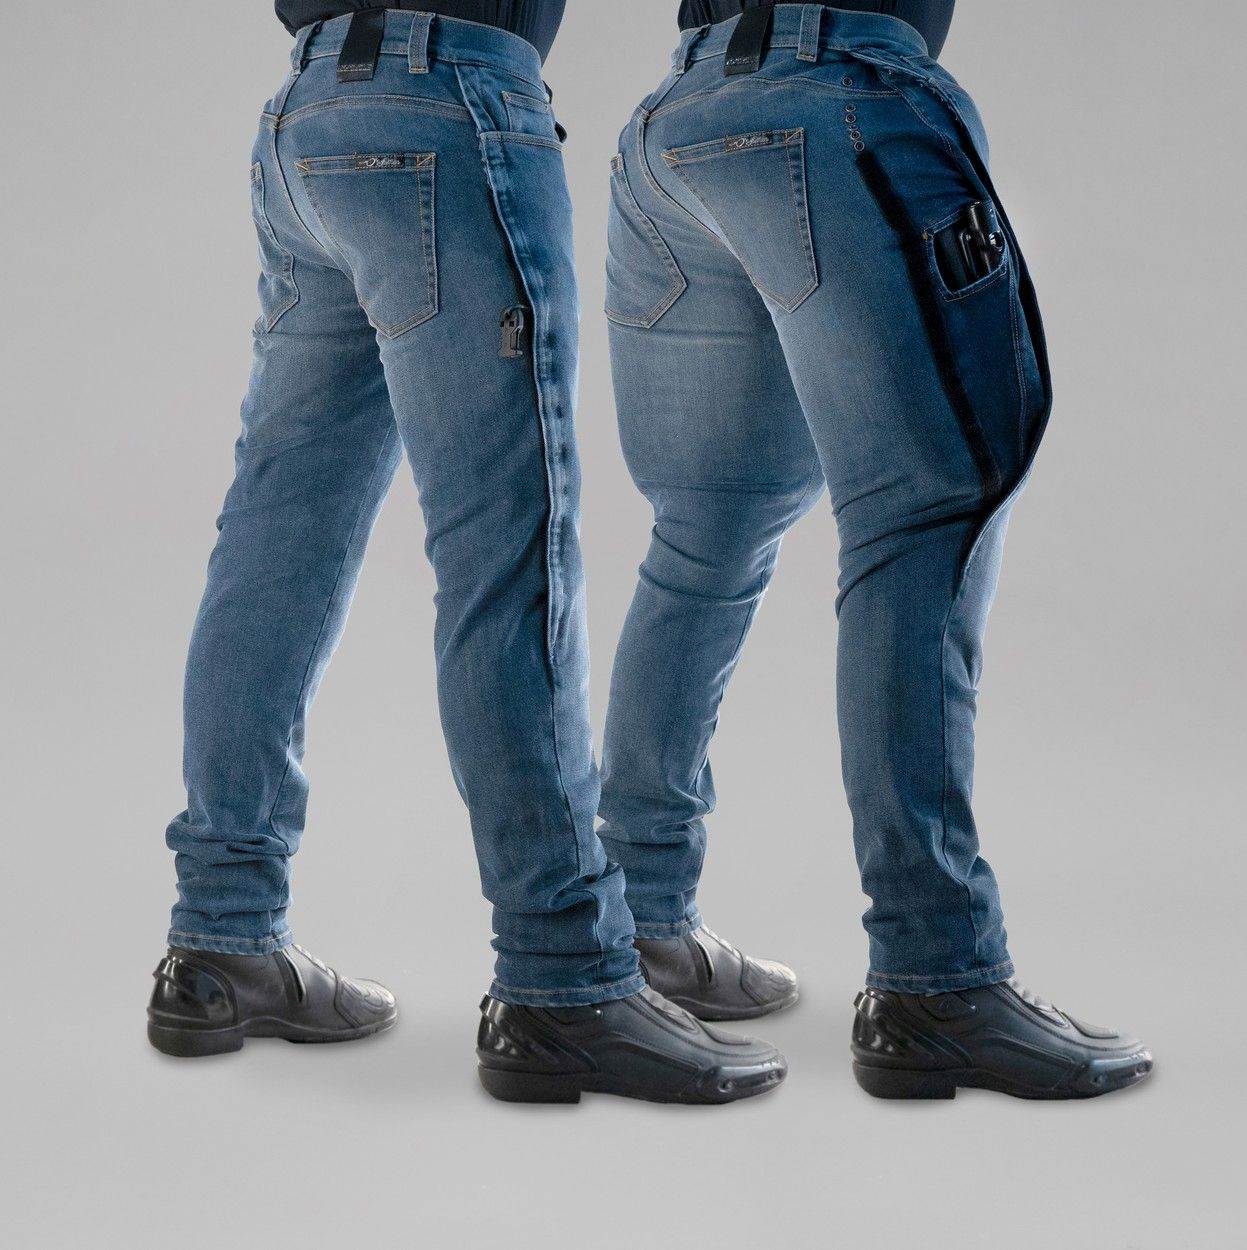  Mo’cycle Airbag jeans (5).jpg 